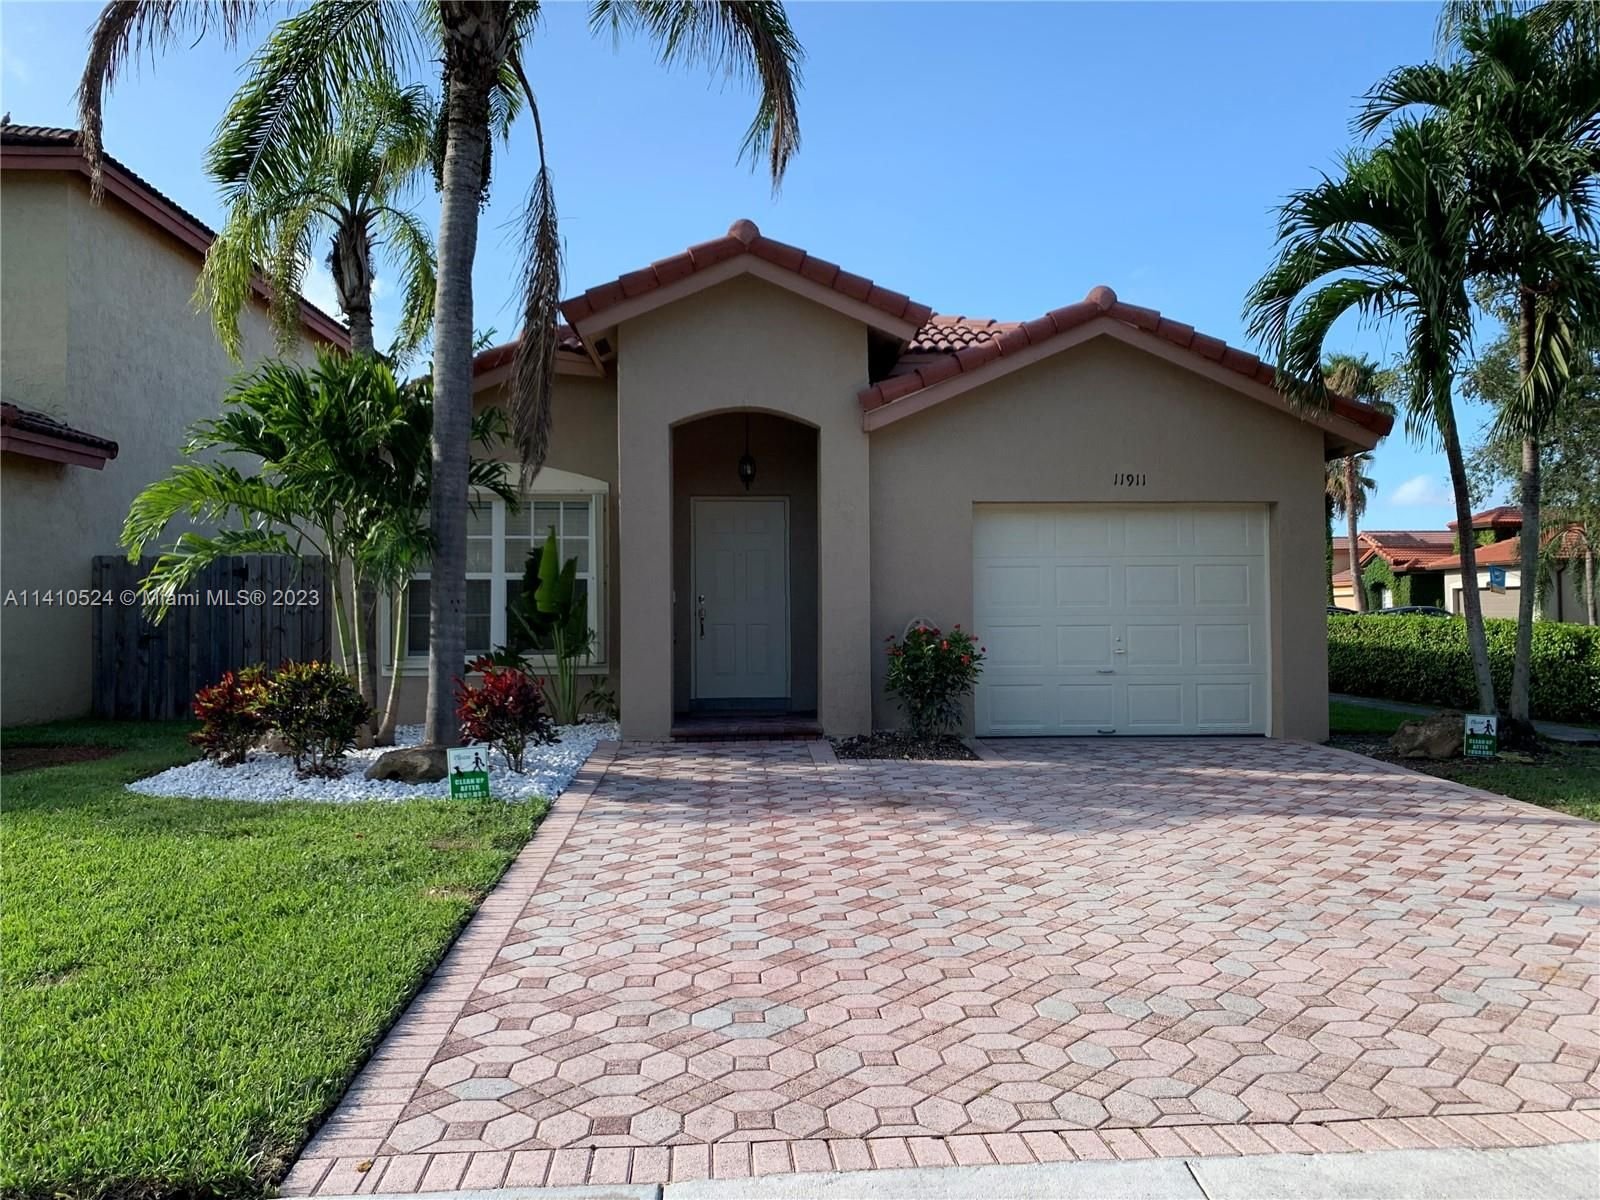 Real estate property located at 11911 137th Ter, Miami-Dade County, Miami, FL